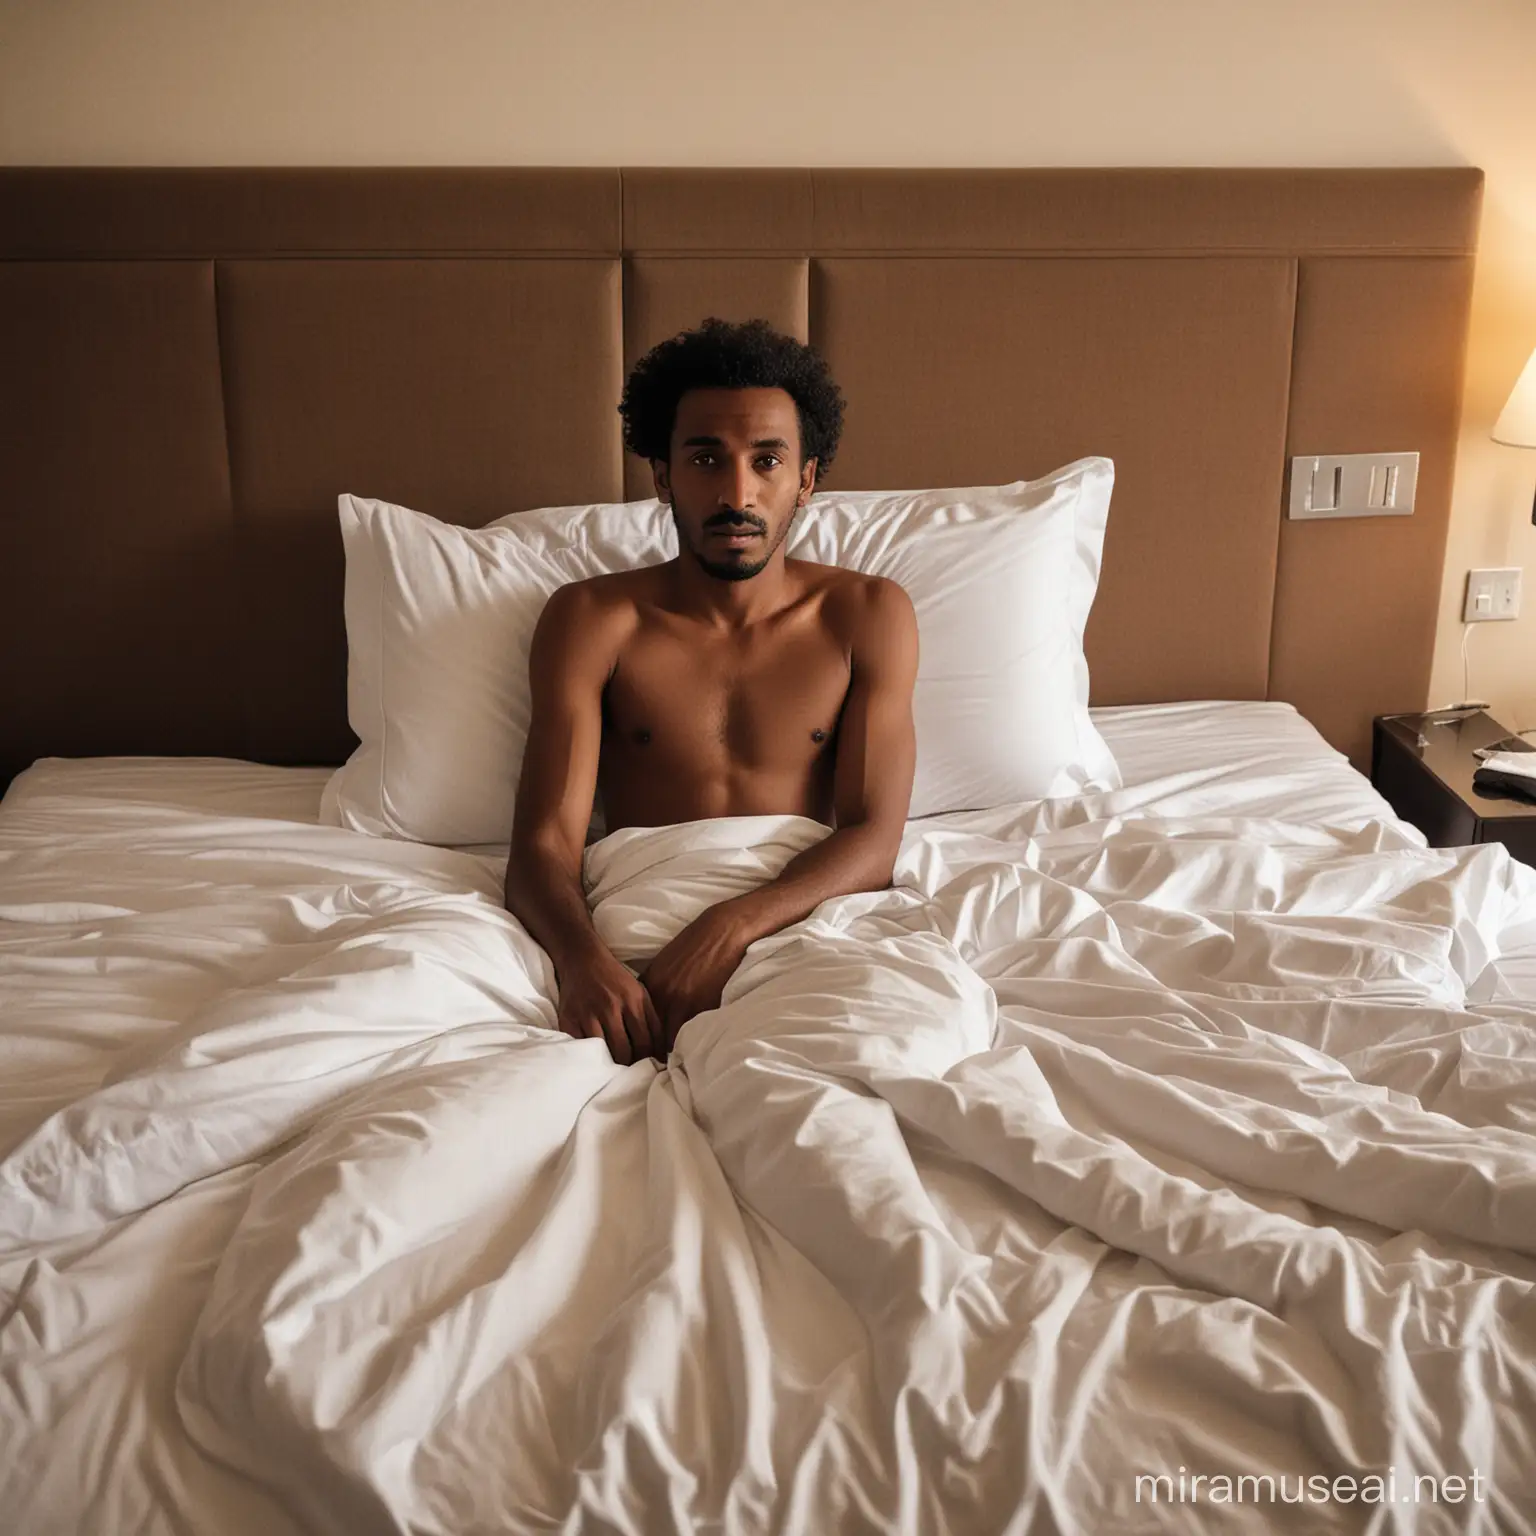 Eritrean Man Enjoying Morning Sun in Hotel Room